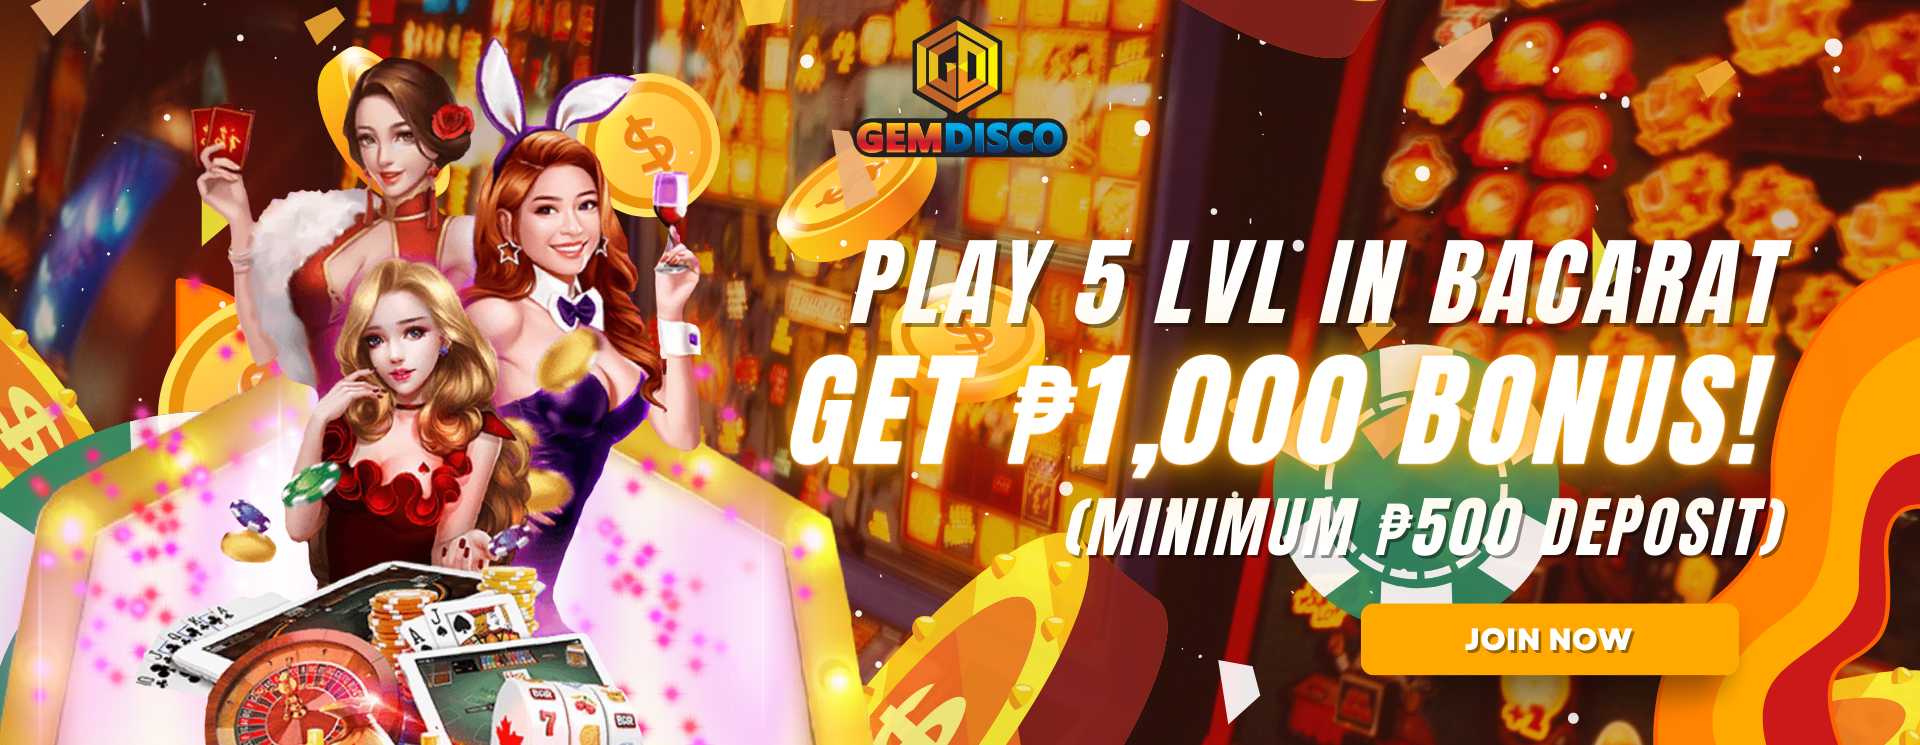 online free casino slot games